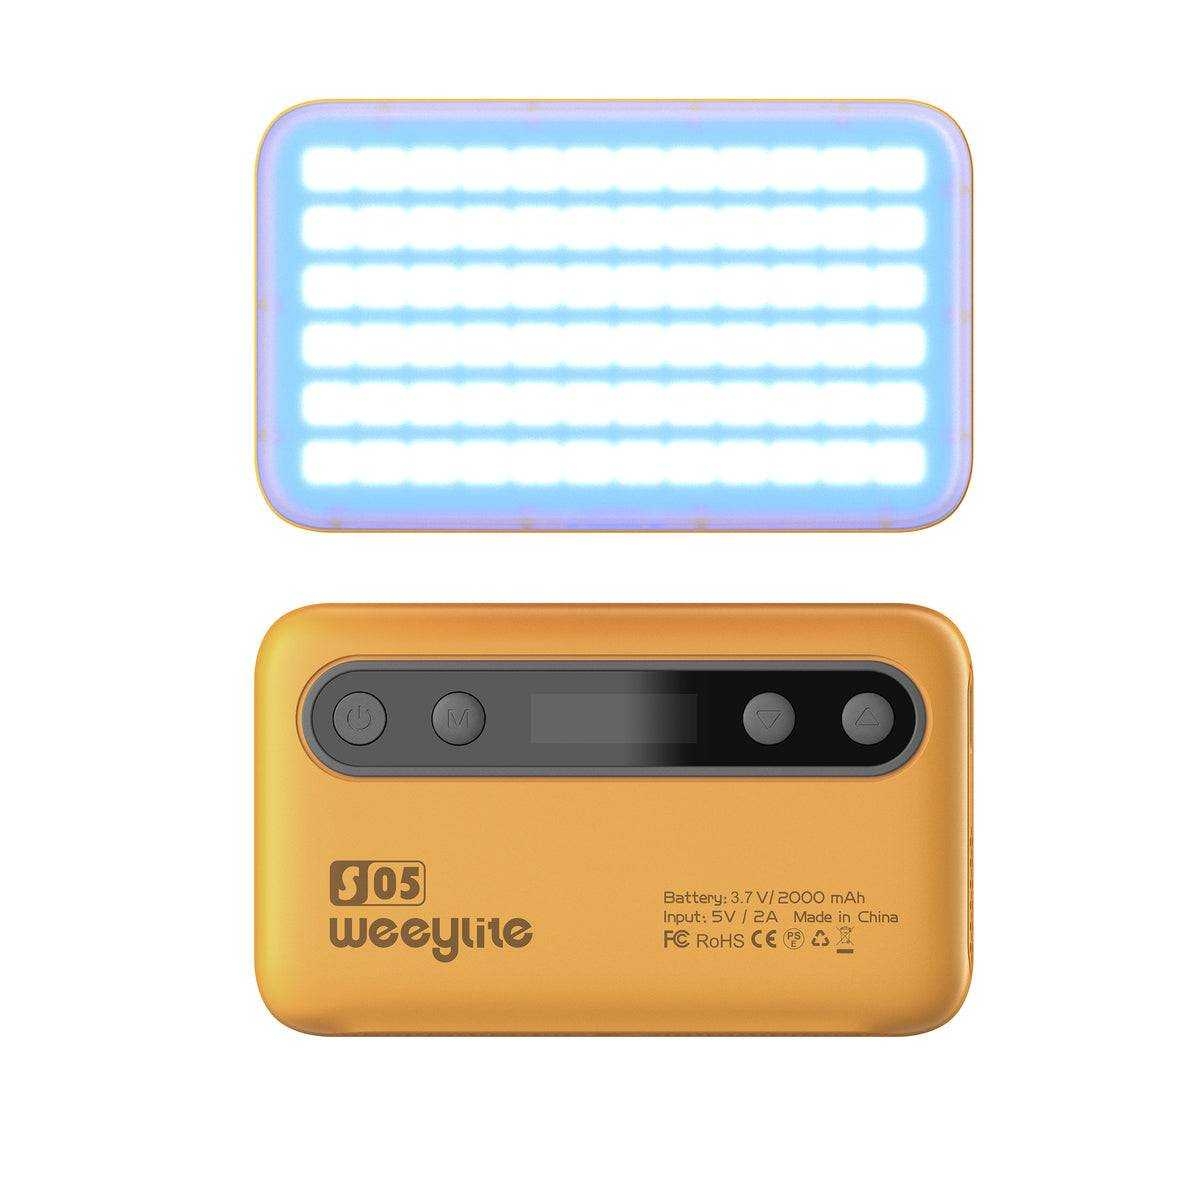 Weeylite S05 RGB Pocket LED Light 2800K~6800K